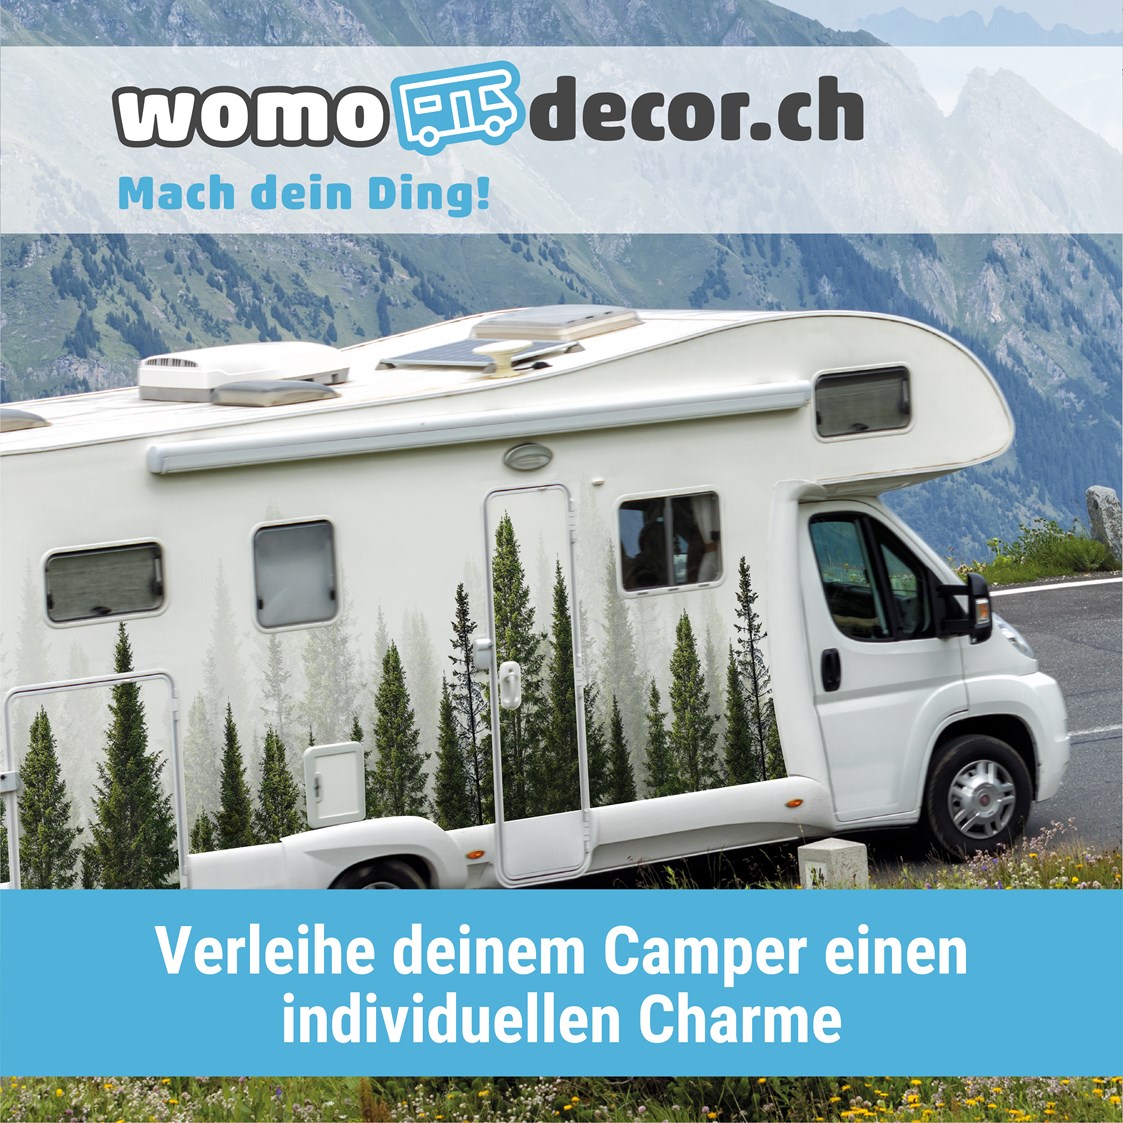 Wohnmobile: Beschrifte deinen Camper als Unikat! - womodecor.ch